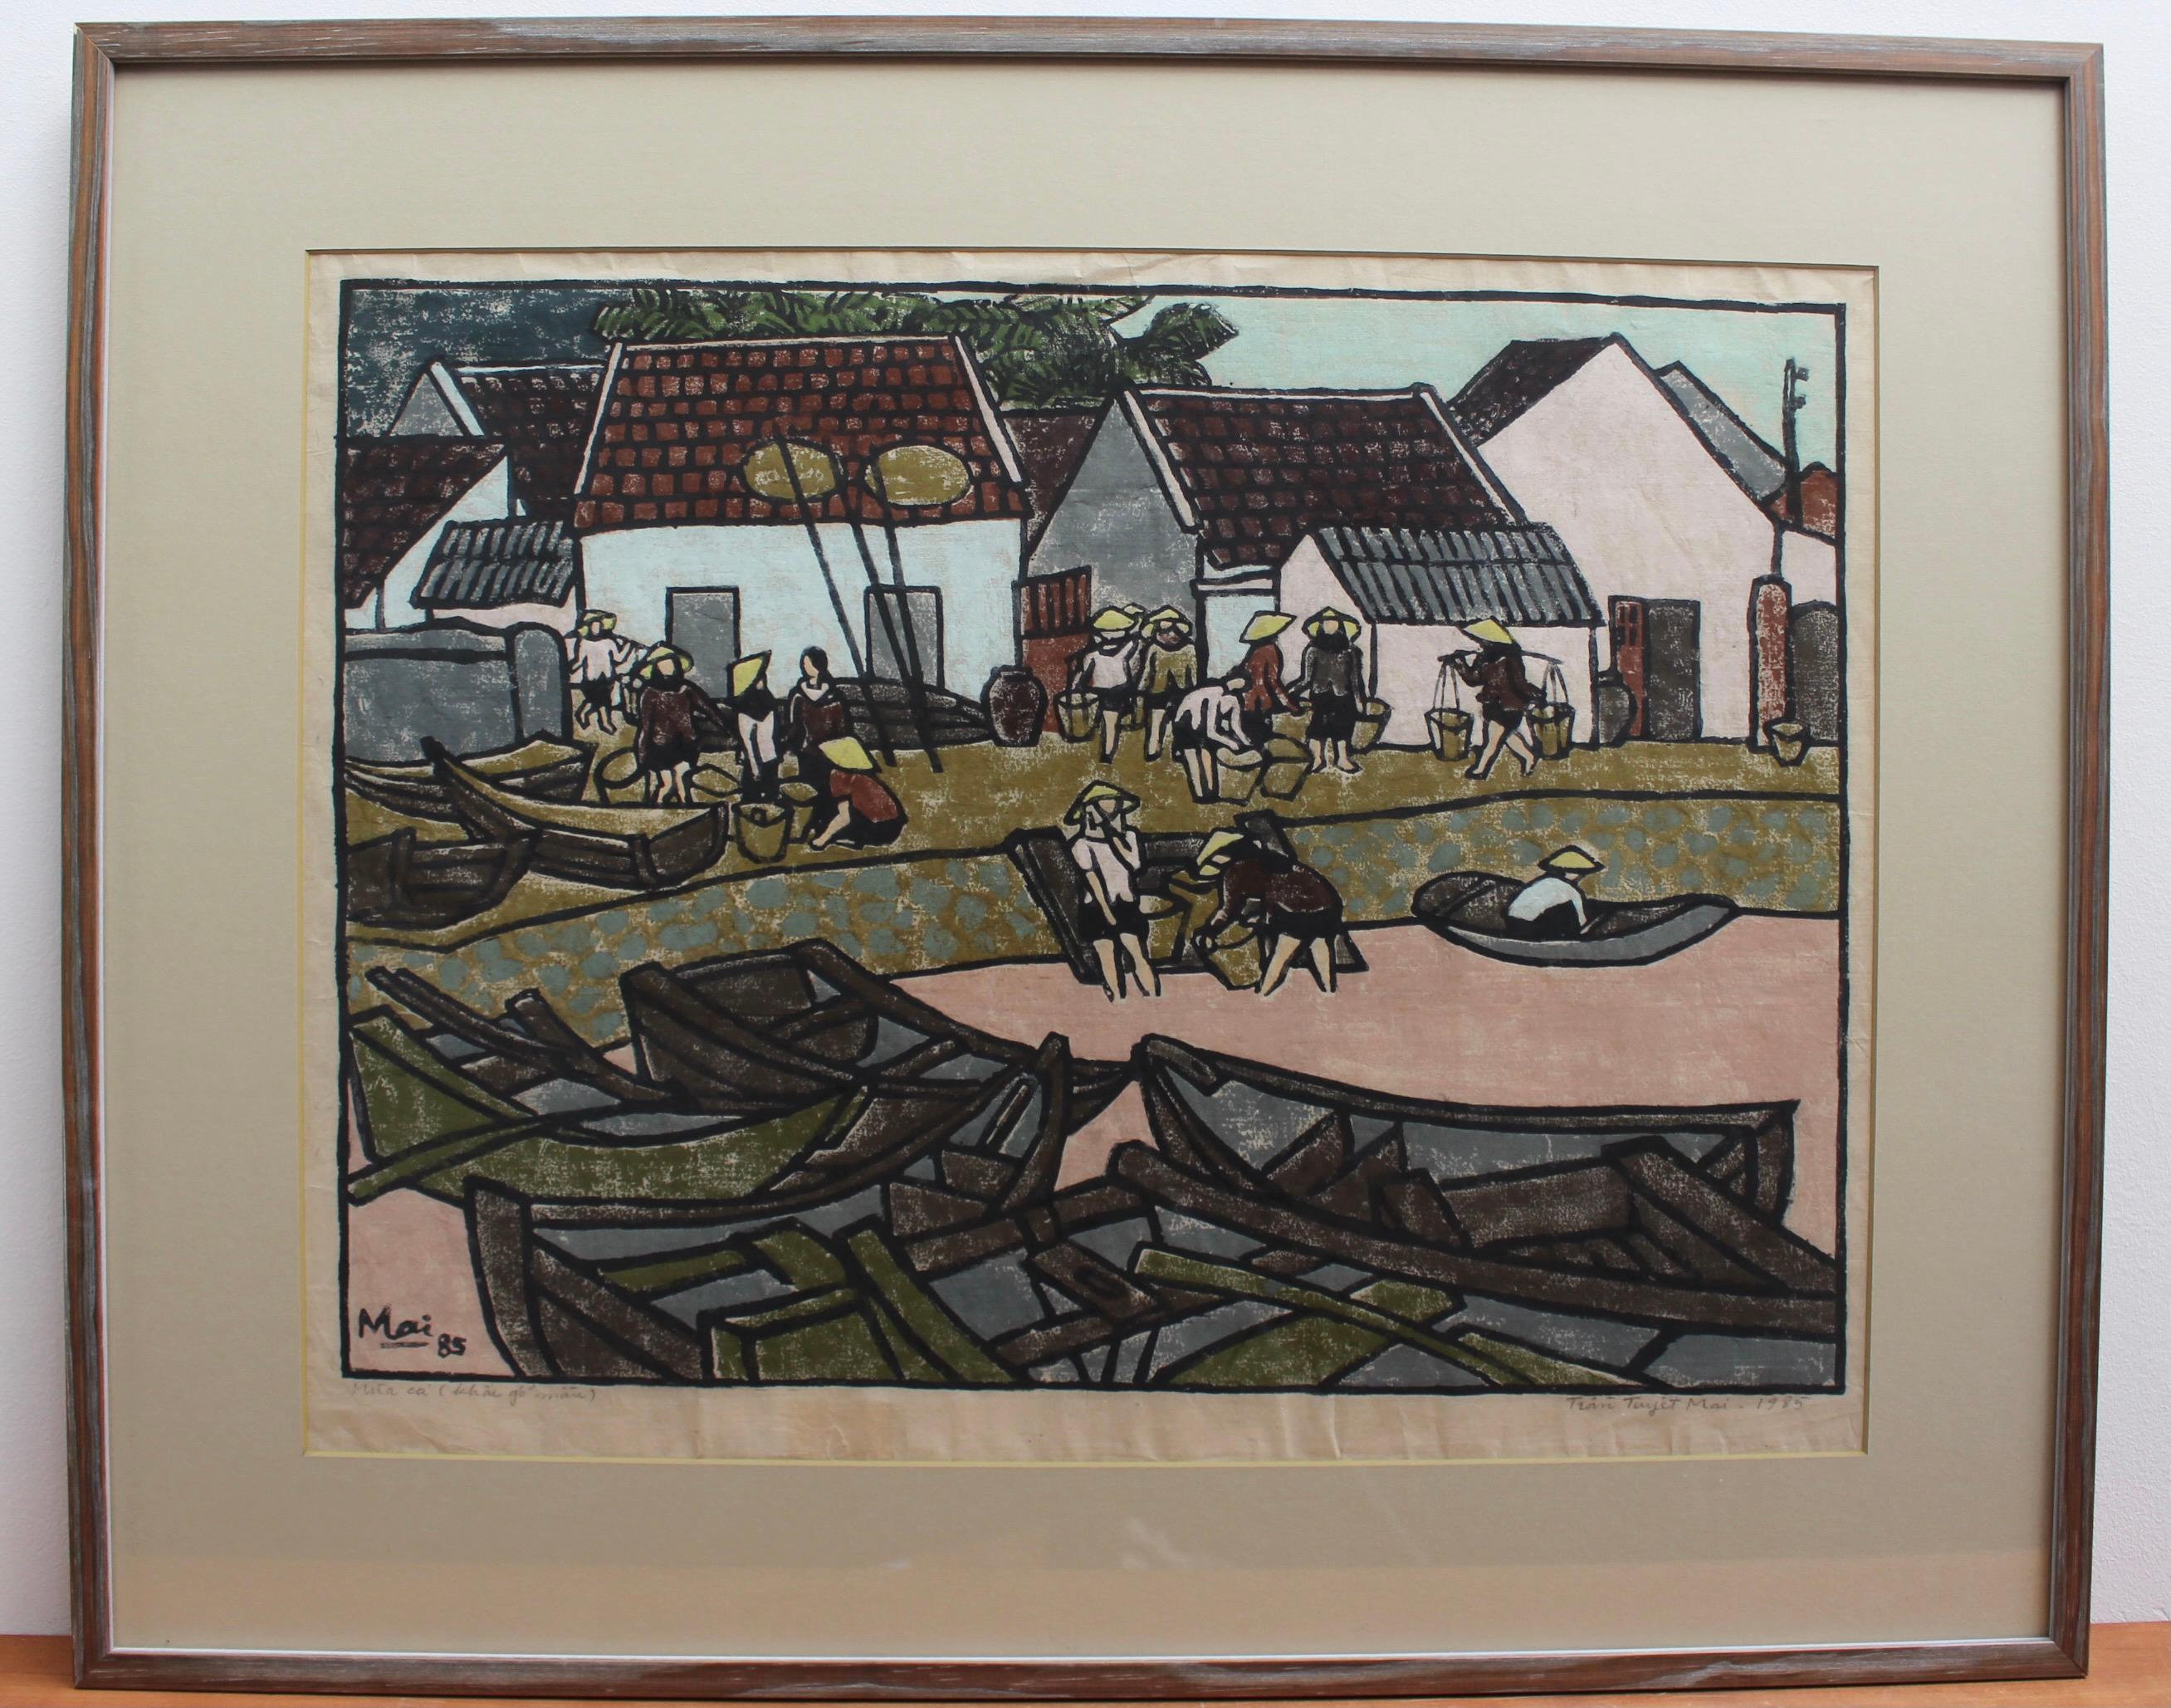 'Fishing Village Along the Mekong' Woodcut in Colour - Print by Tran Tuyet-Mai